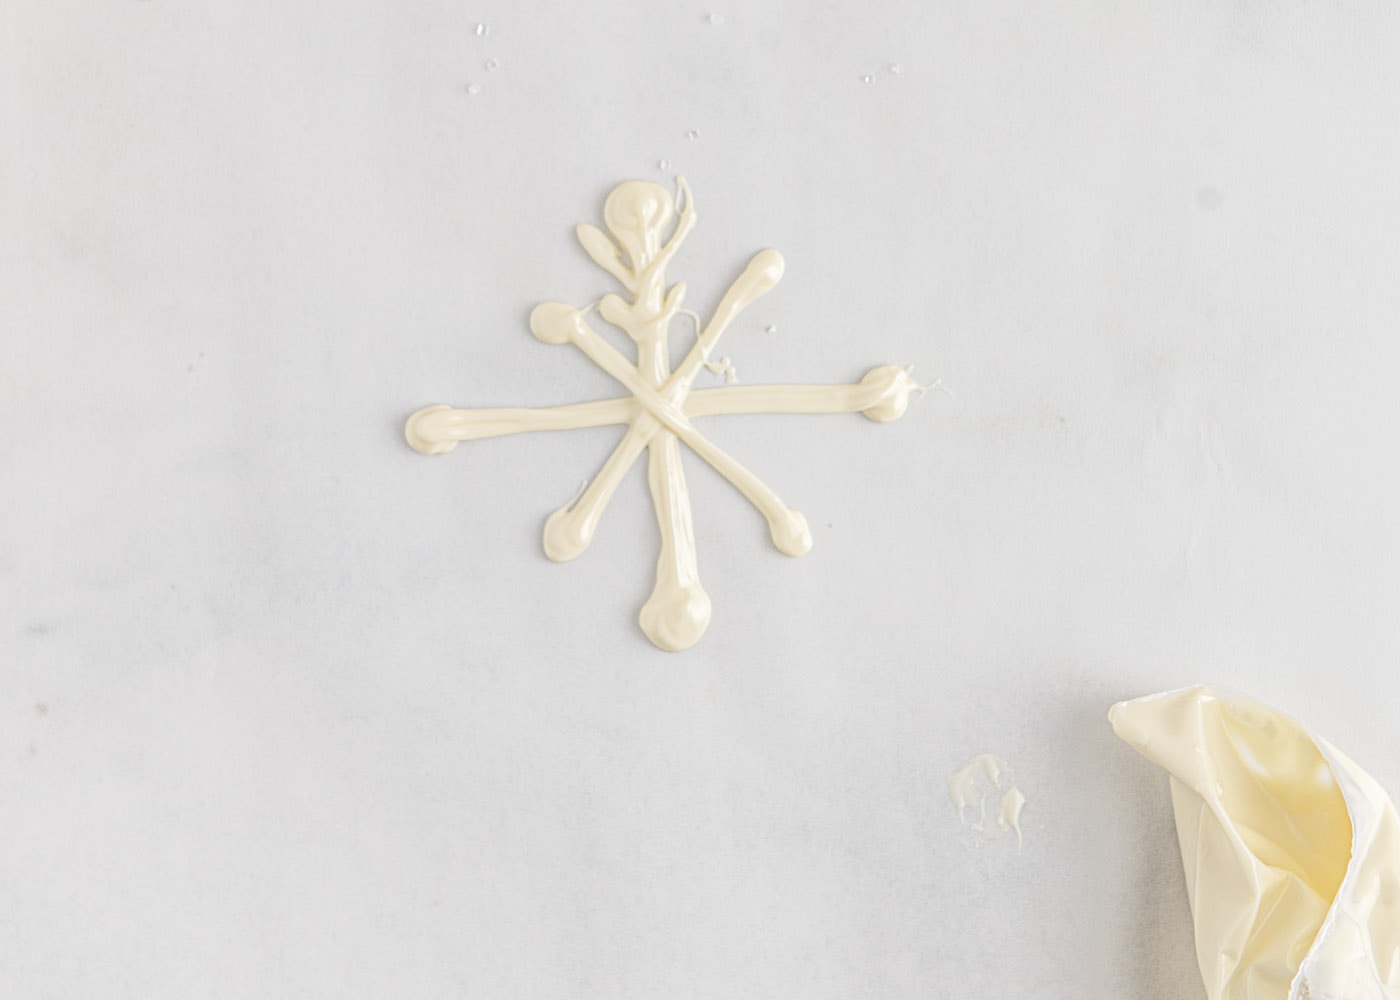 how to make white chocolate snowflakes